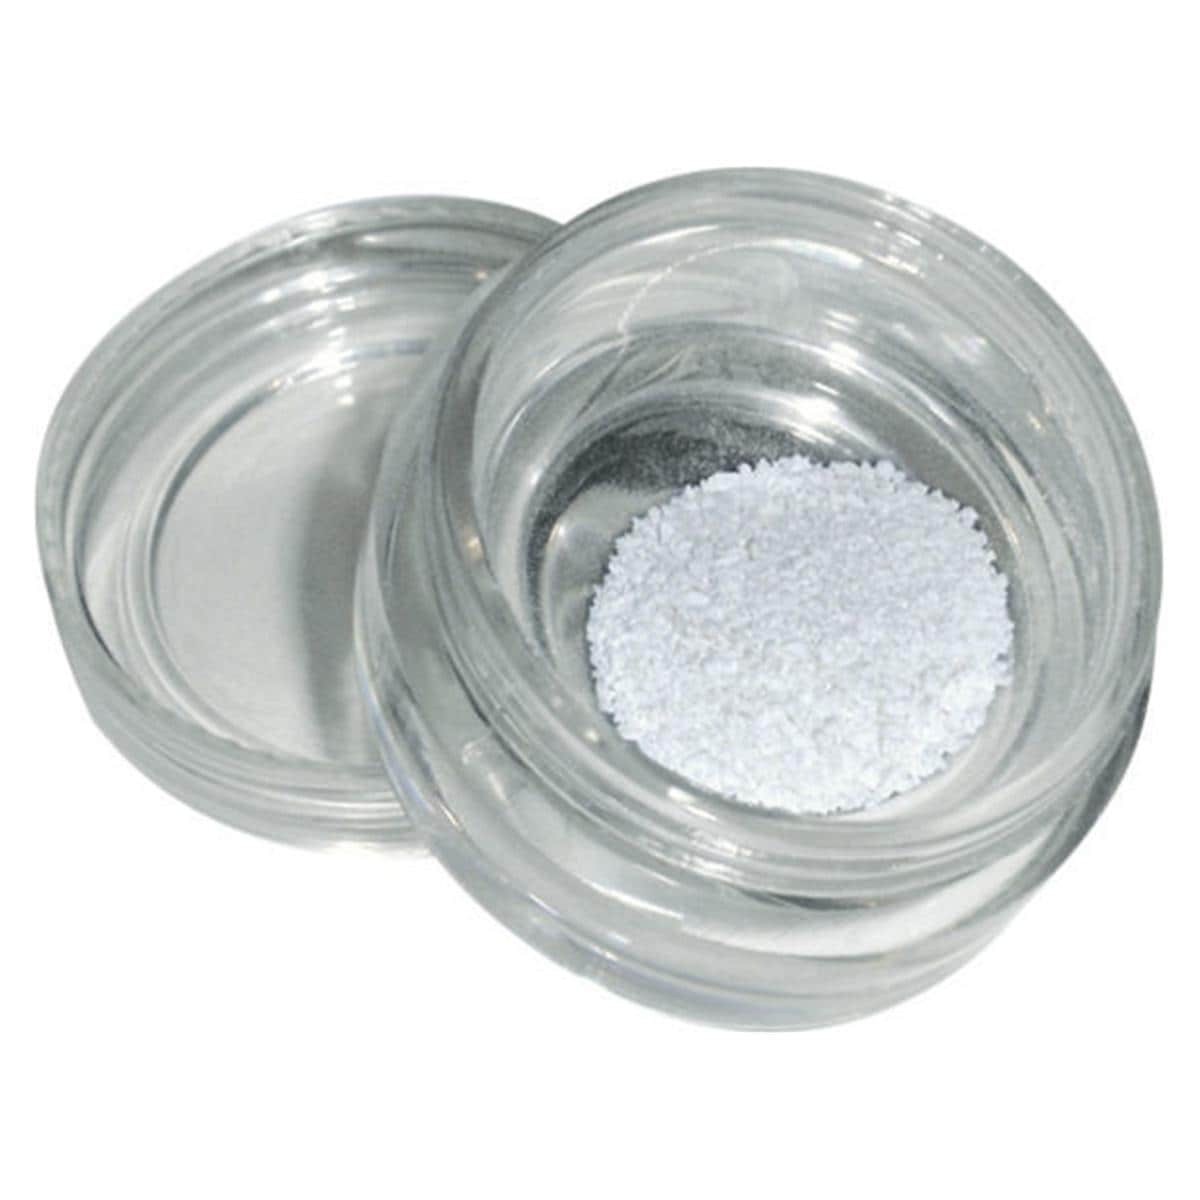 NuOss® Granulat - Spongiosagranulat (Cancellous), 0,25 - 1,0 mm, Packung 2,0 g